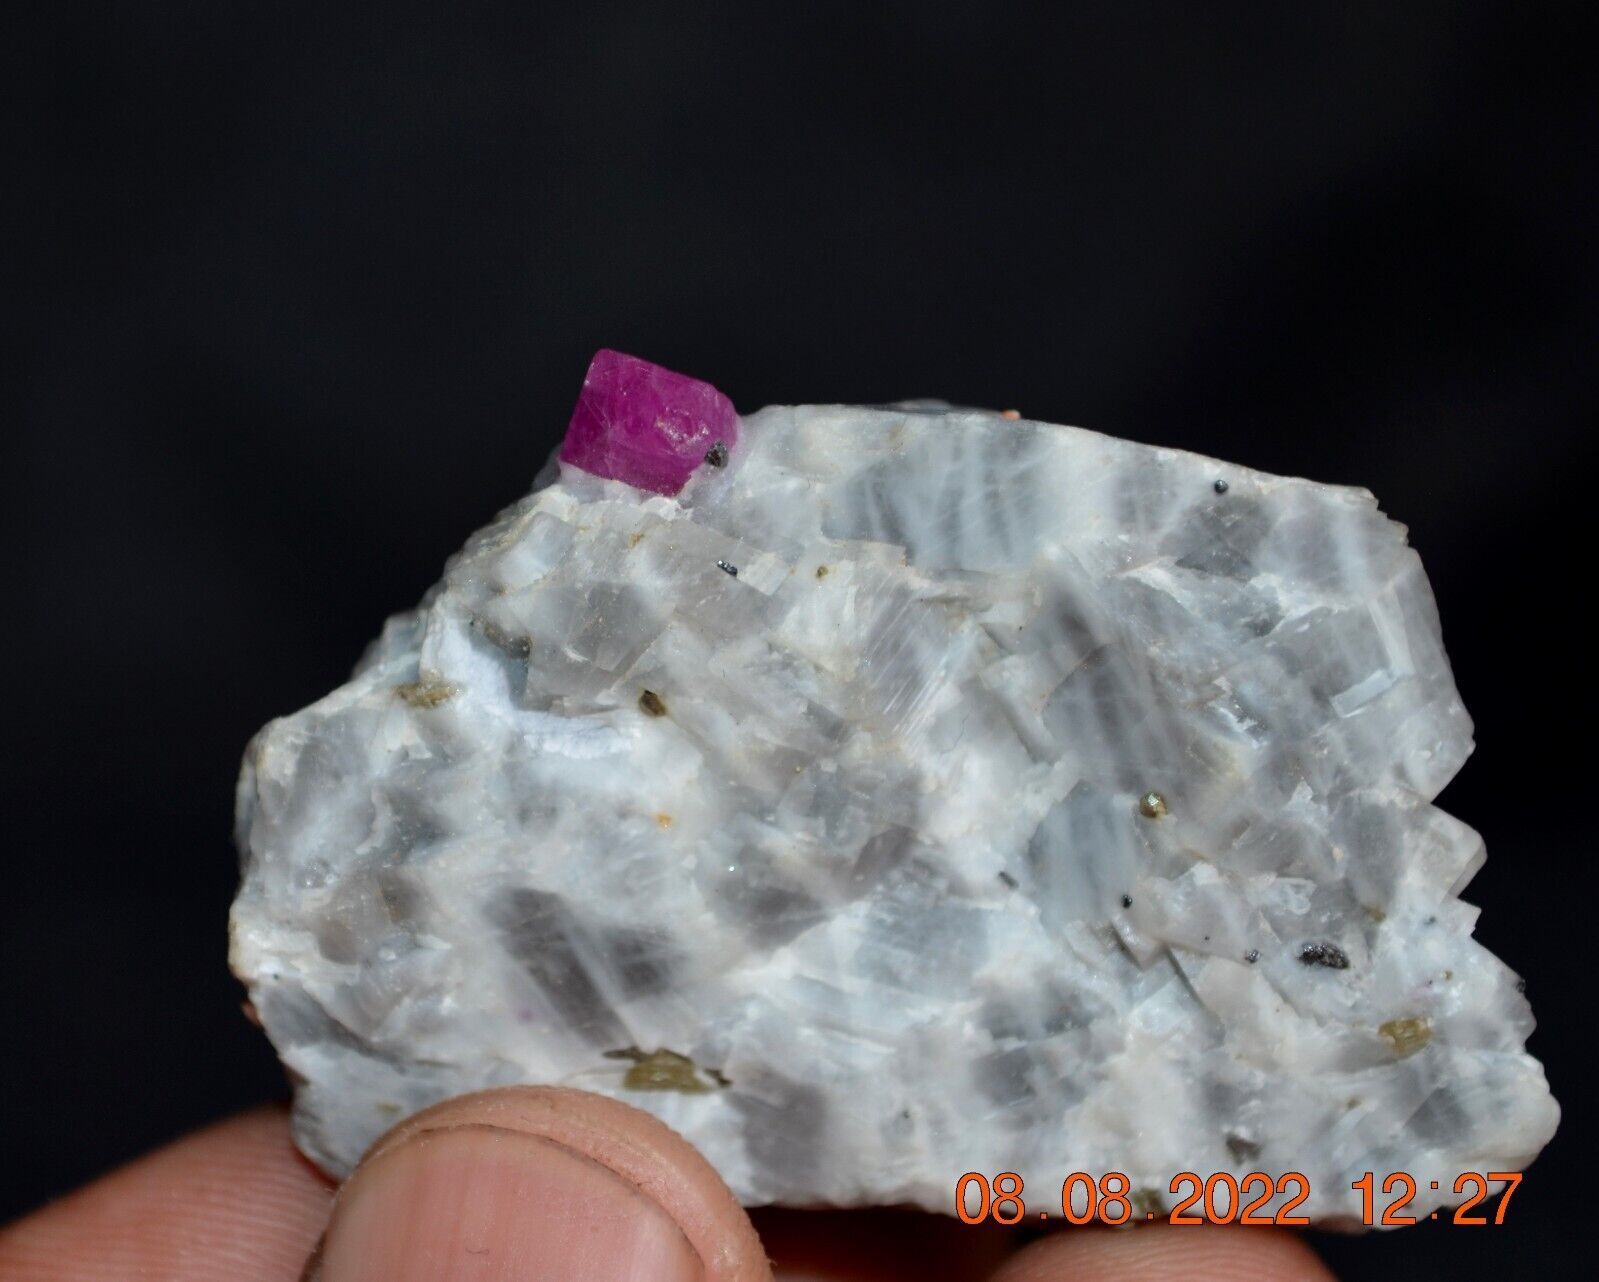 43g Reddish Pink Corundum var. Ruby Mineral Specimen from Jegdalek Afghanistan